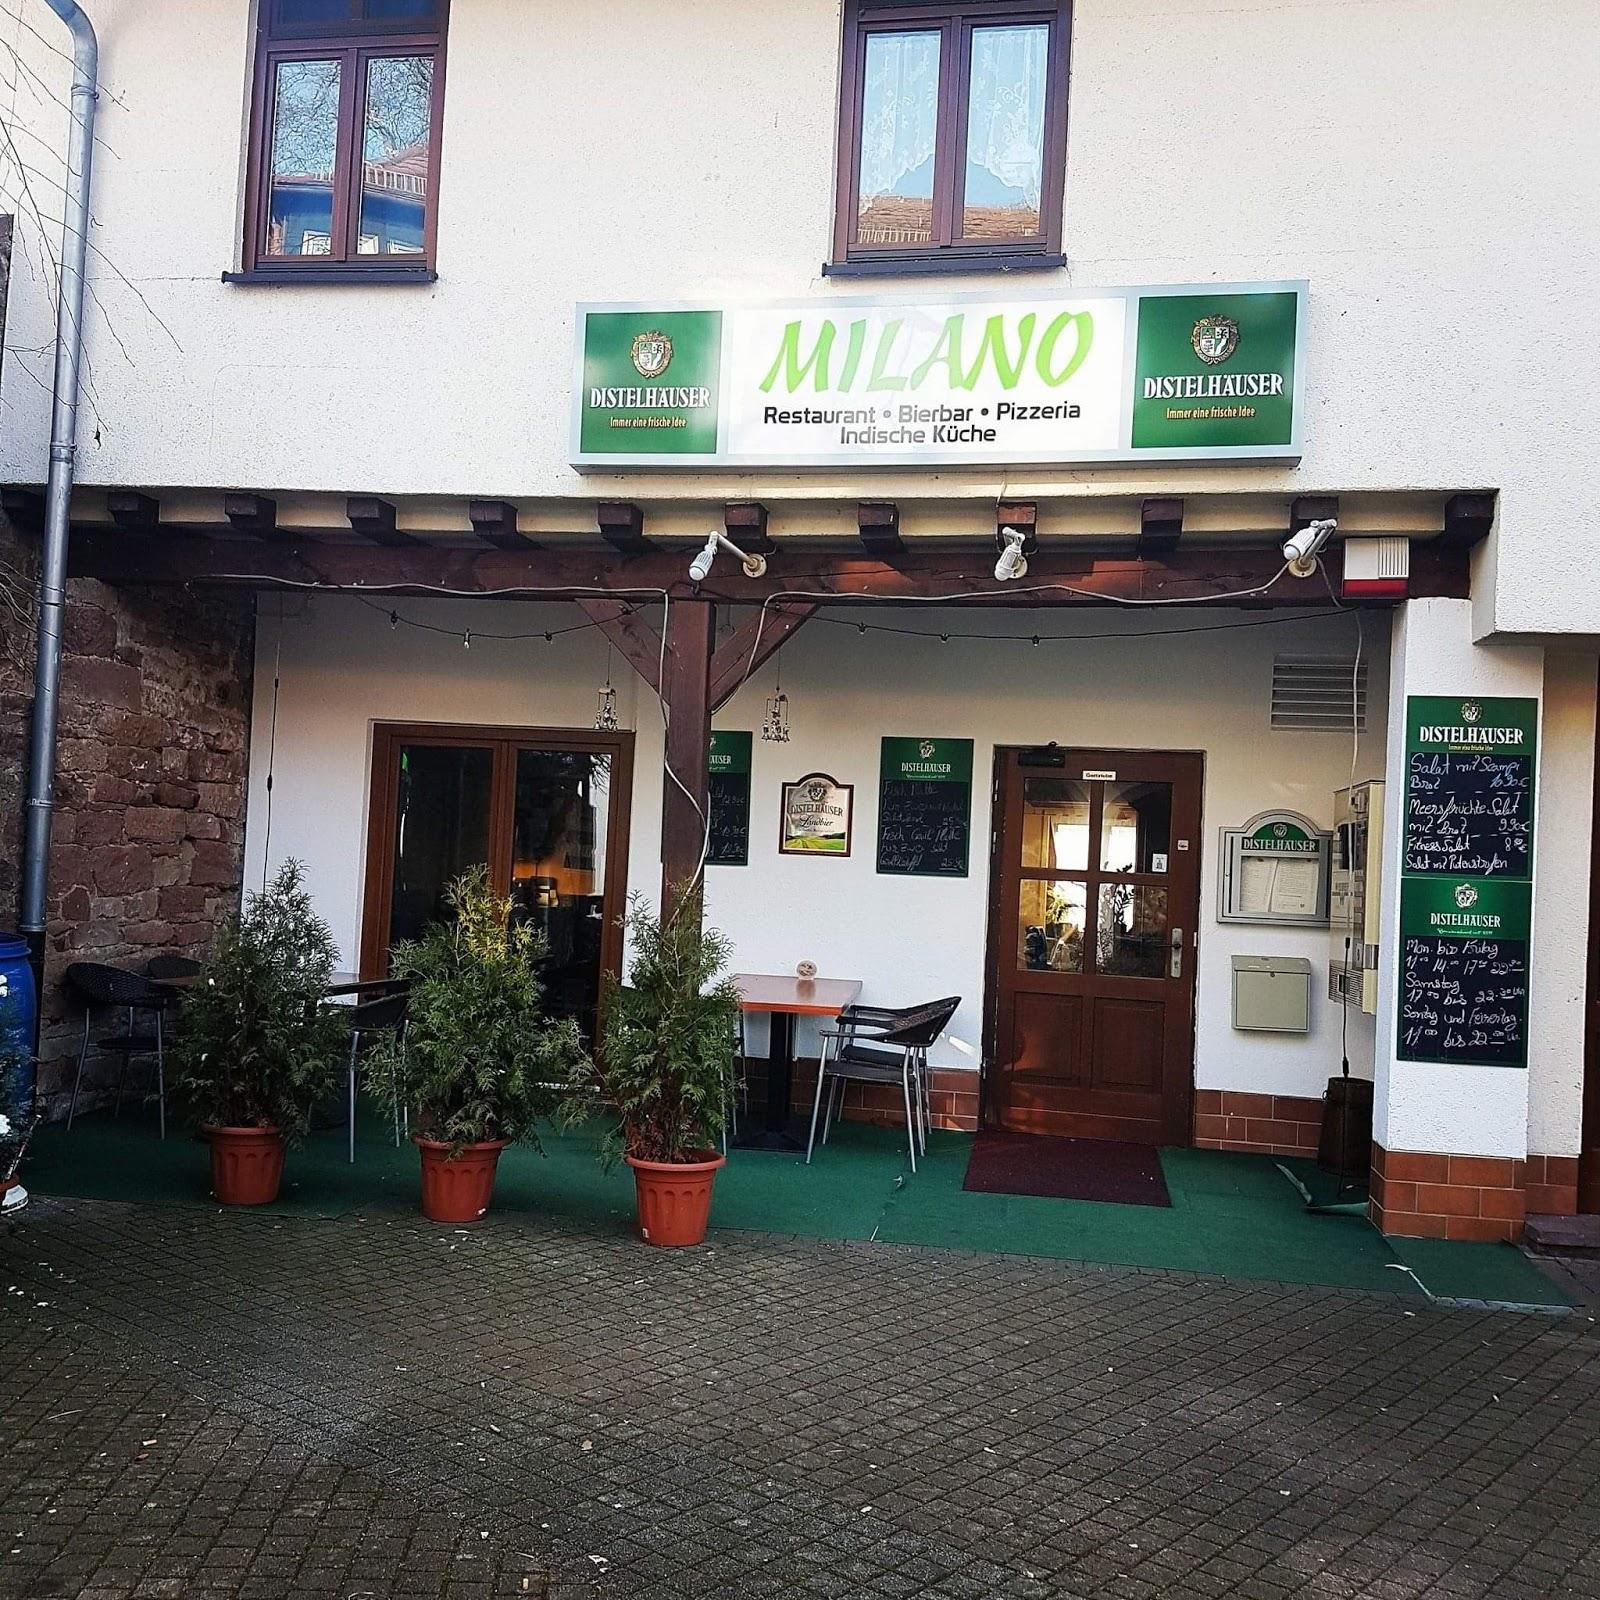 Restaurant "Milano" in Erbach